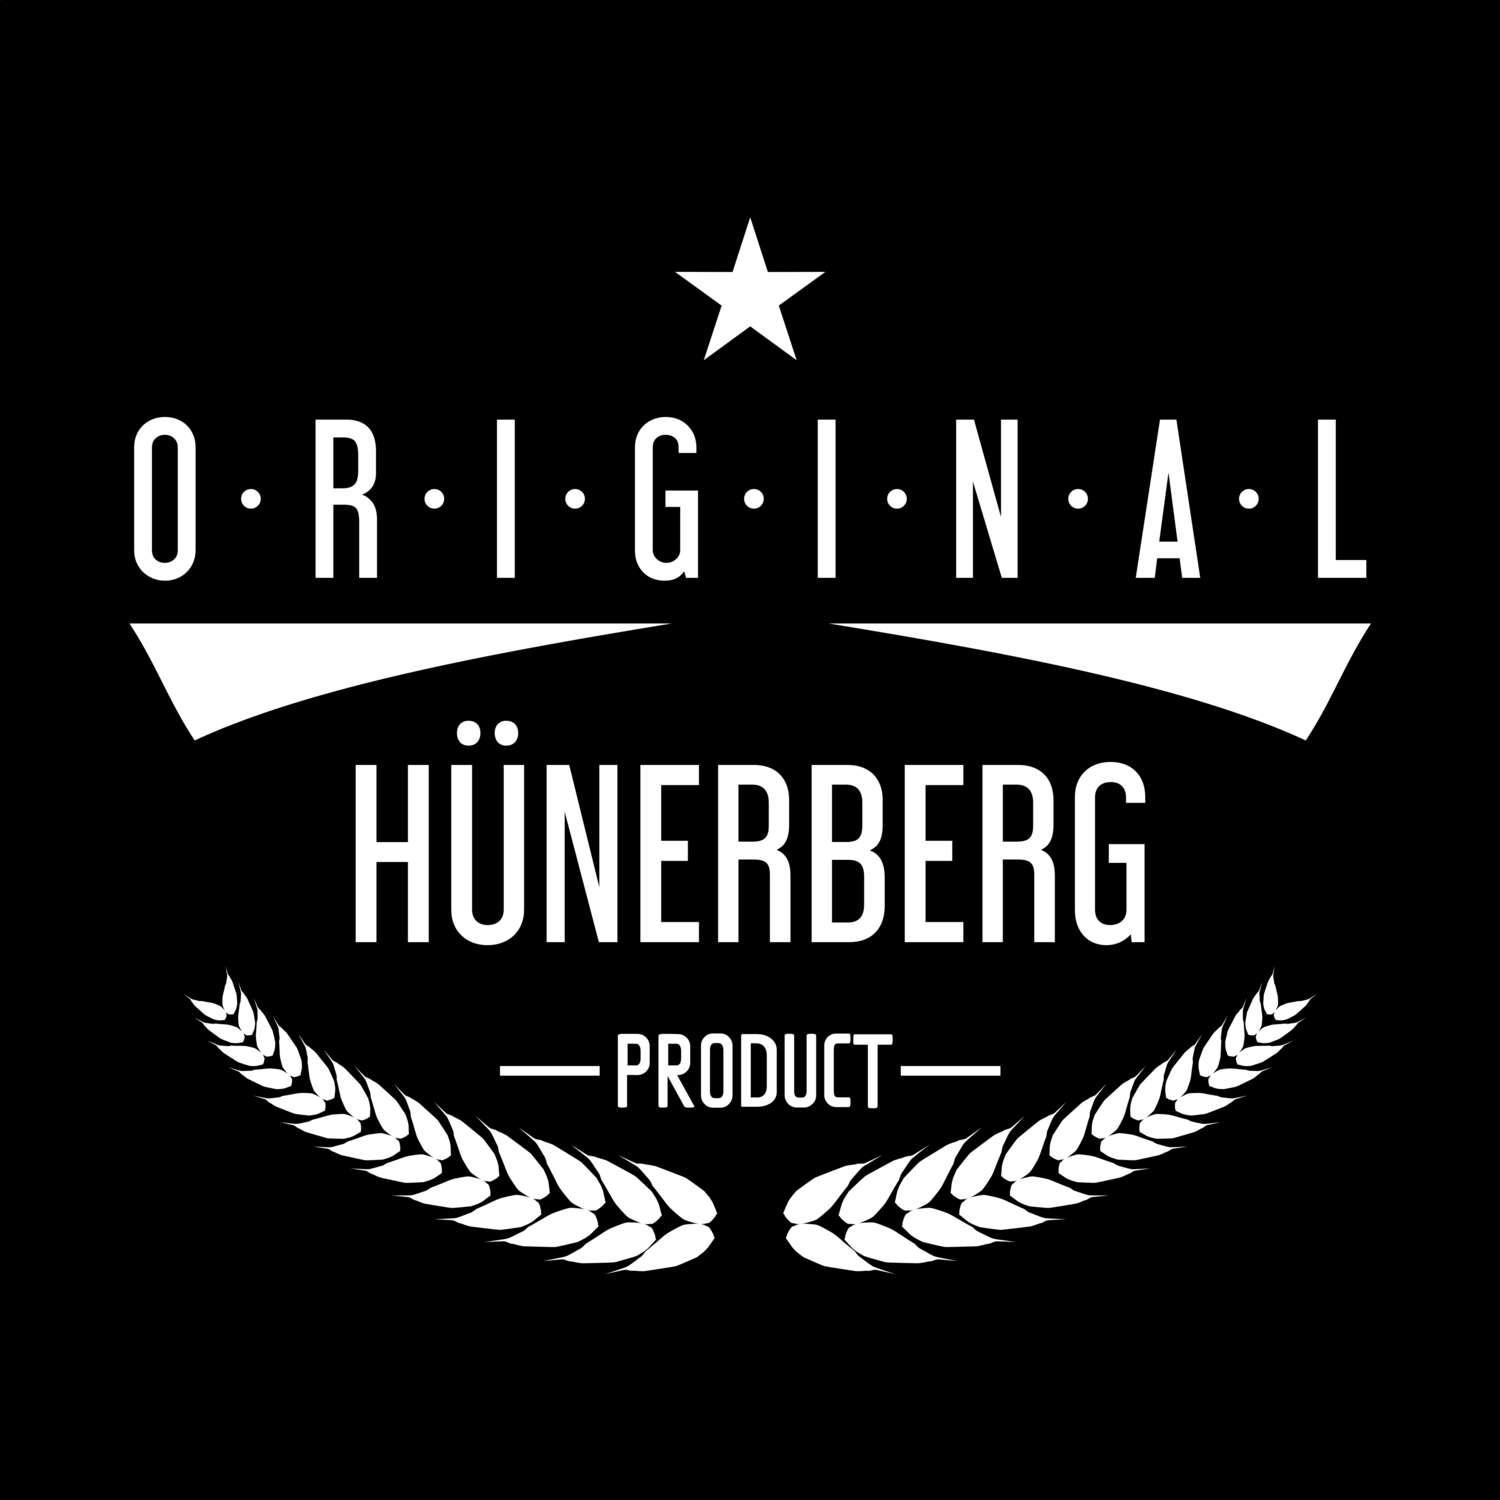 Hünerberg T-Shirt »Original Product«